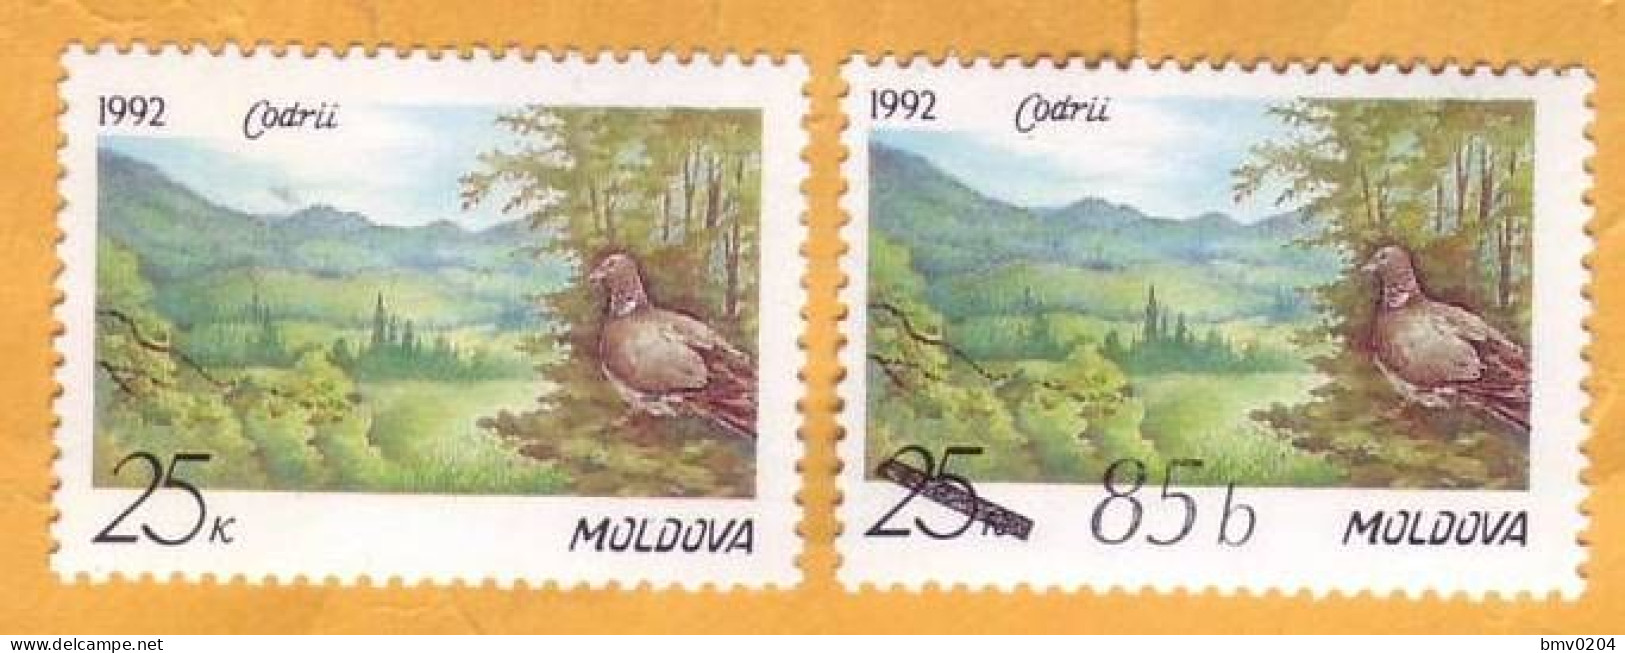 1992 2007 Moldova Moldavie Moldau 2v Mint  Birds. Ringdove. Fauna. Forest. Landscape - Tauben & Flughühner